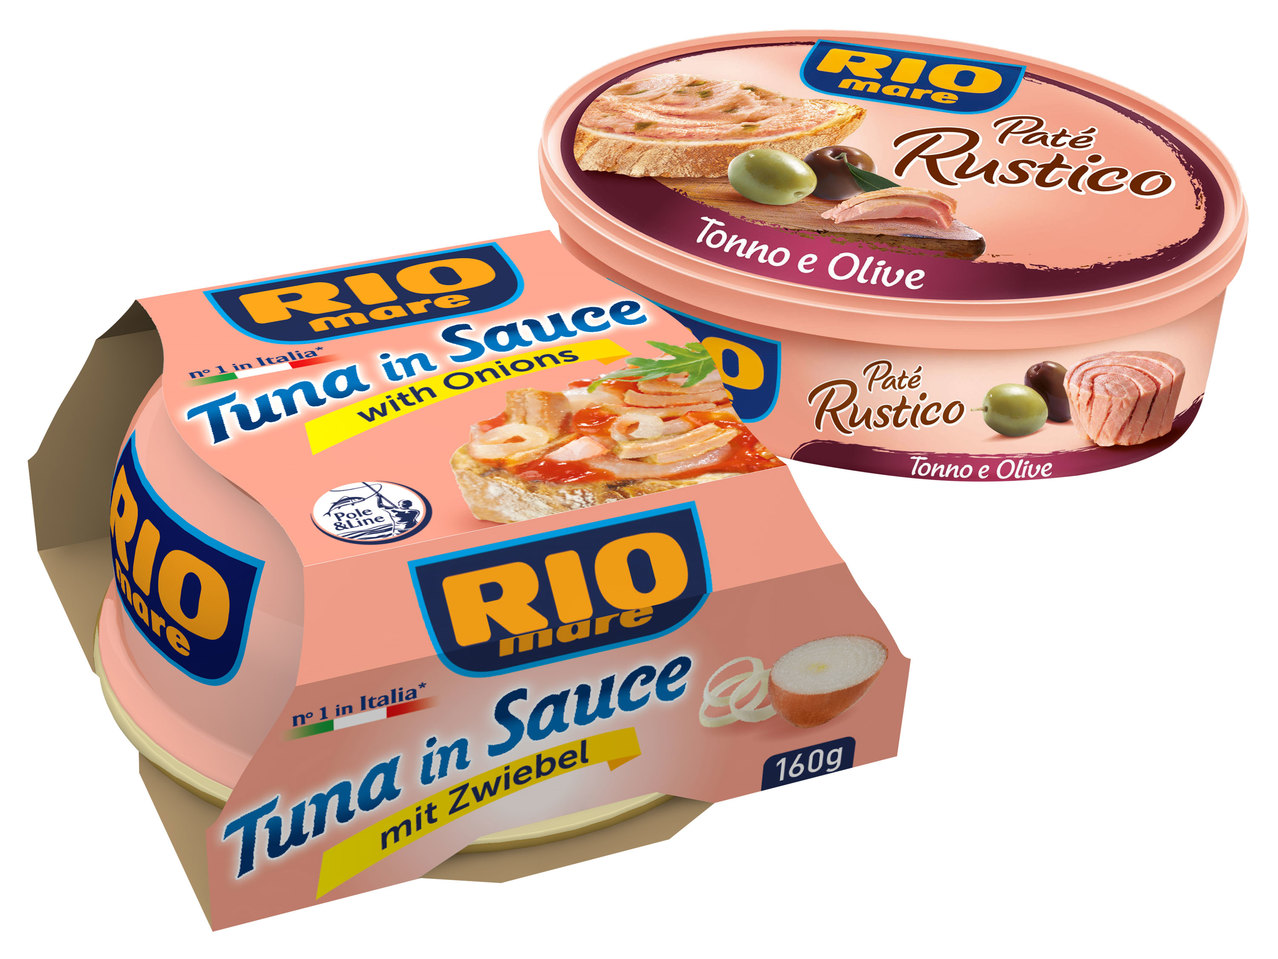 RIO MARE Thunfisch in Sauce oder Paté Rustico